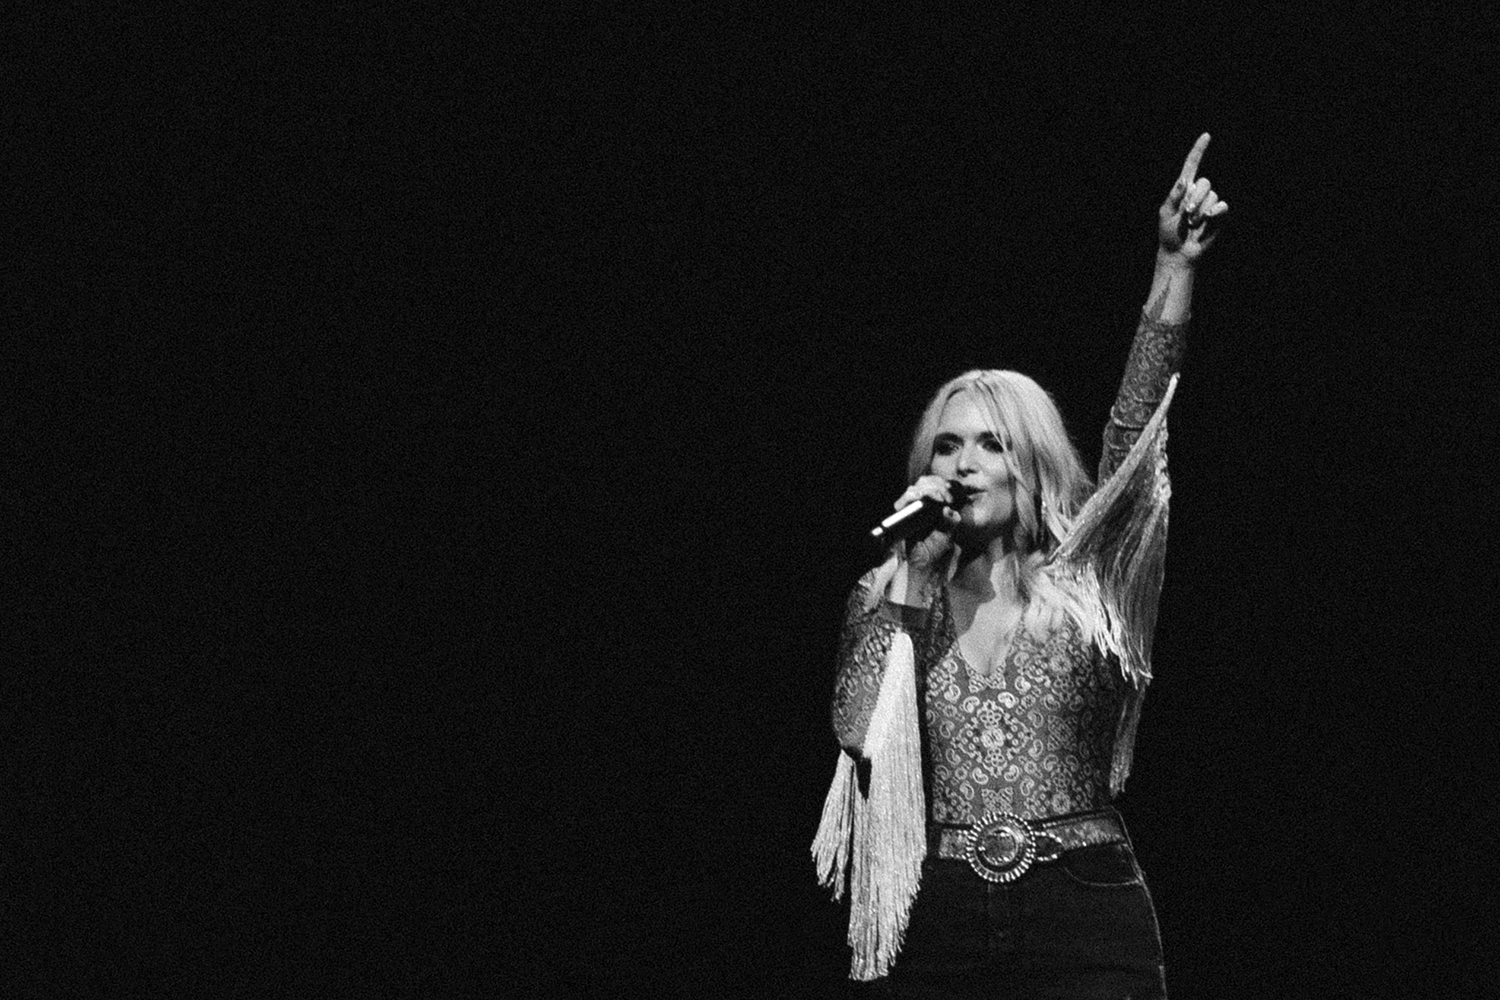 PHOTOS: Miranda Lambert Brings ‘Livin’ Like Hippies’ Tour to Little Rock, Arkansas